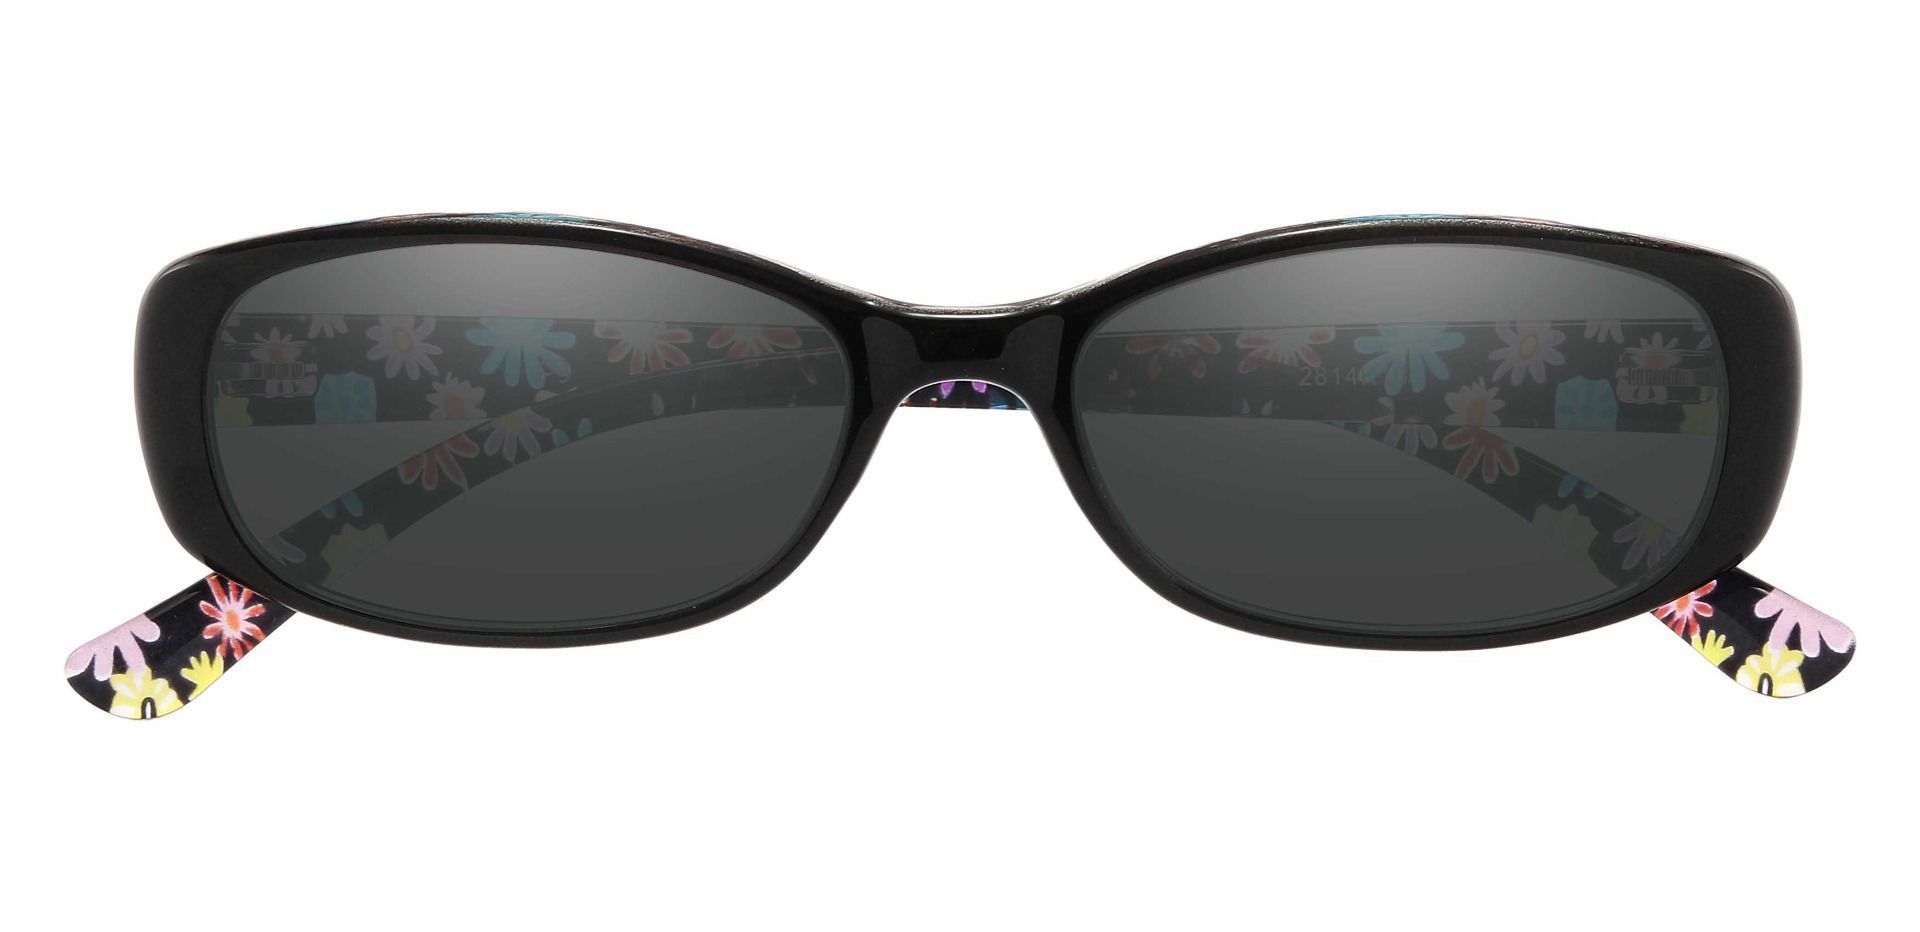 Bethesda Rectangle Non-Rx Sunglasses - Black Frame With Gray Lenses